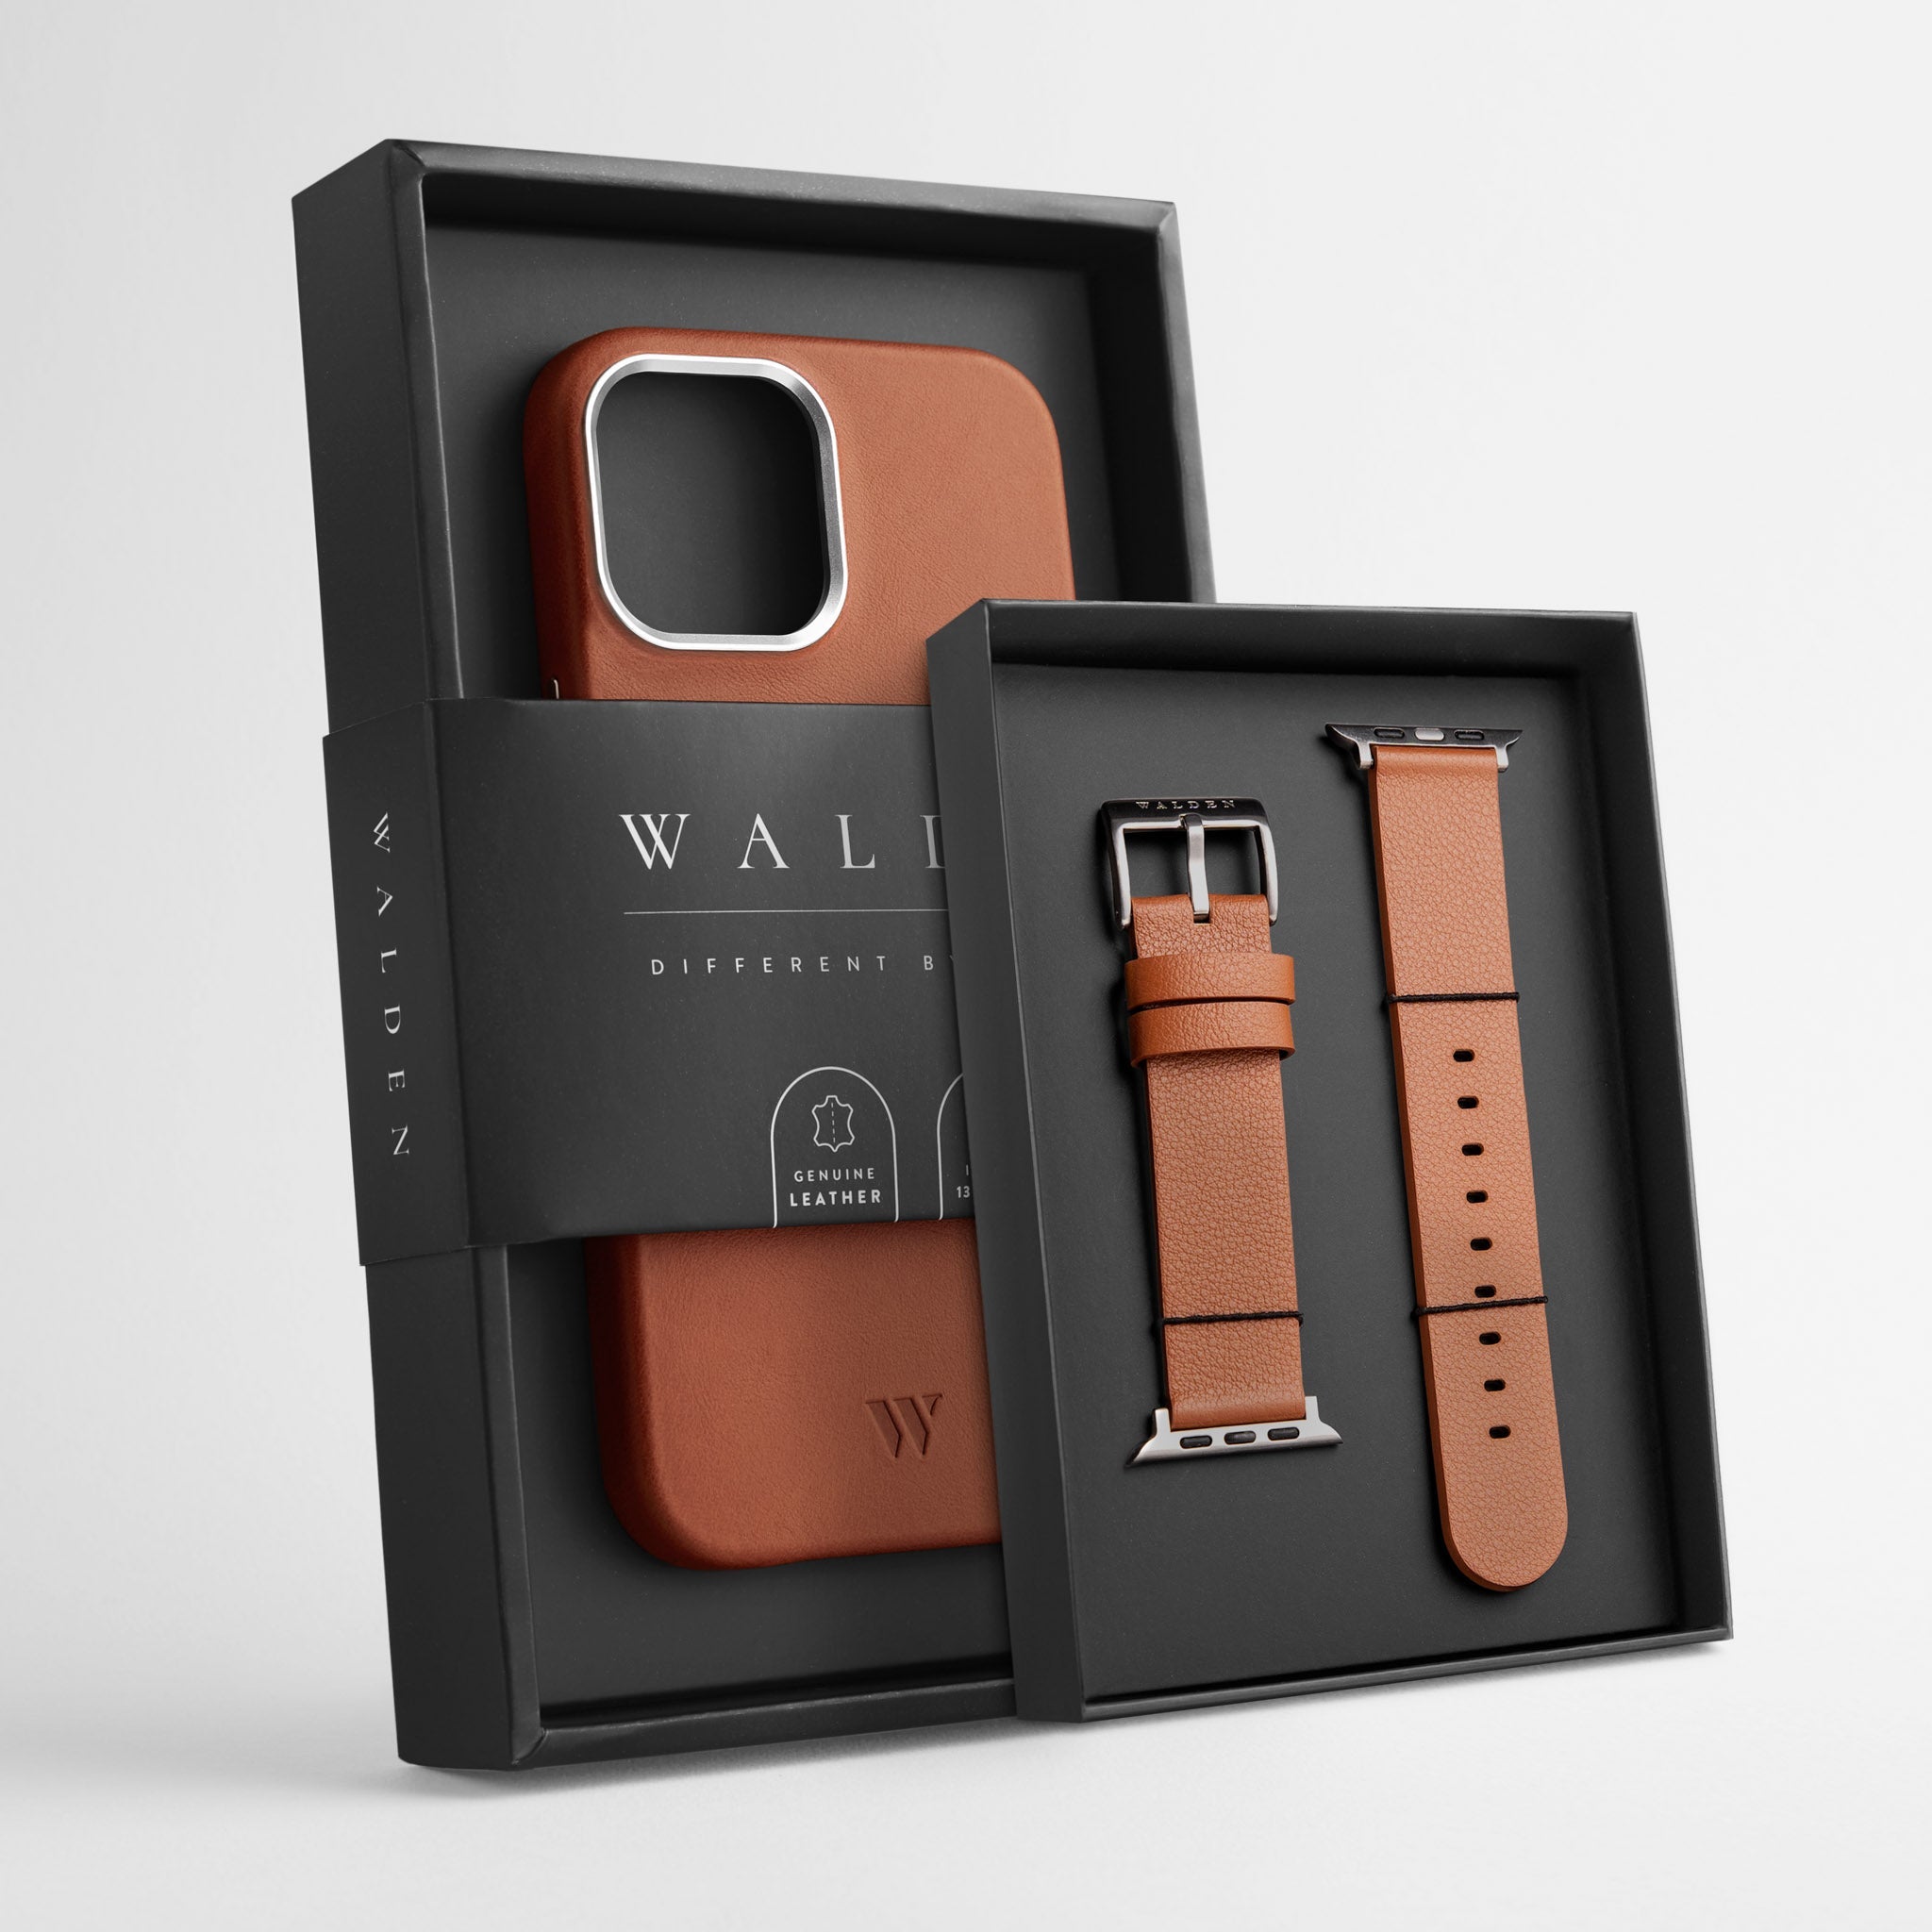 Walden® Kit Funda iPhone + Estuche Airpods Color Bosco